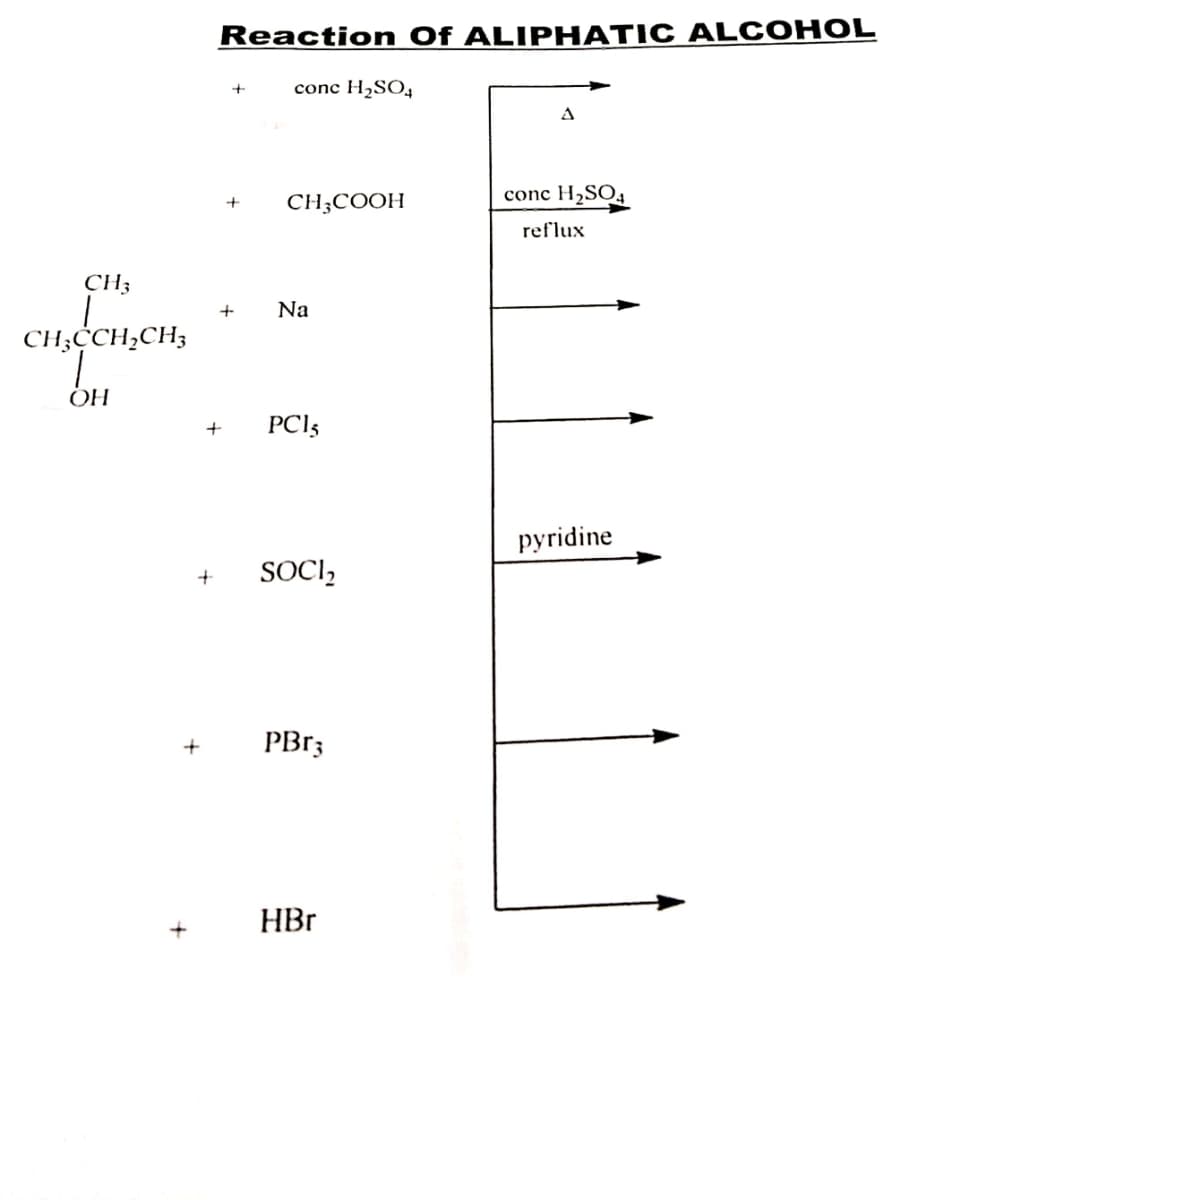 Reaction Of ALIPHATIC AL COHOL
conc H2SO4
CH;COOH
conc H2SO4
reflux
CH3
+
Na
CH;ĊCH,CH;
OH
PCI5
pyridine
SOCI,
PB13
HBr
